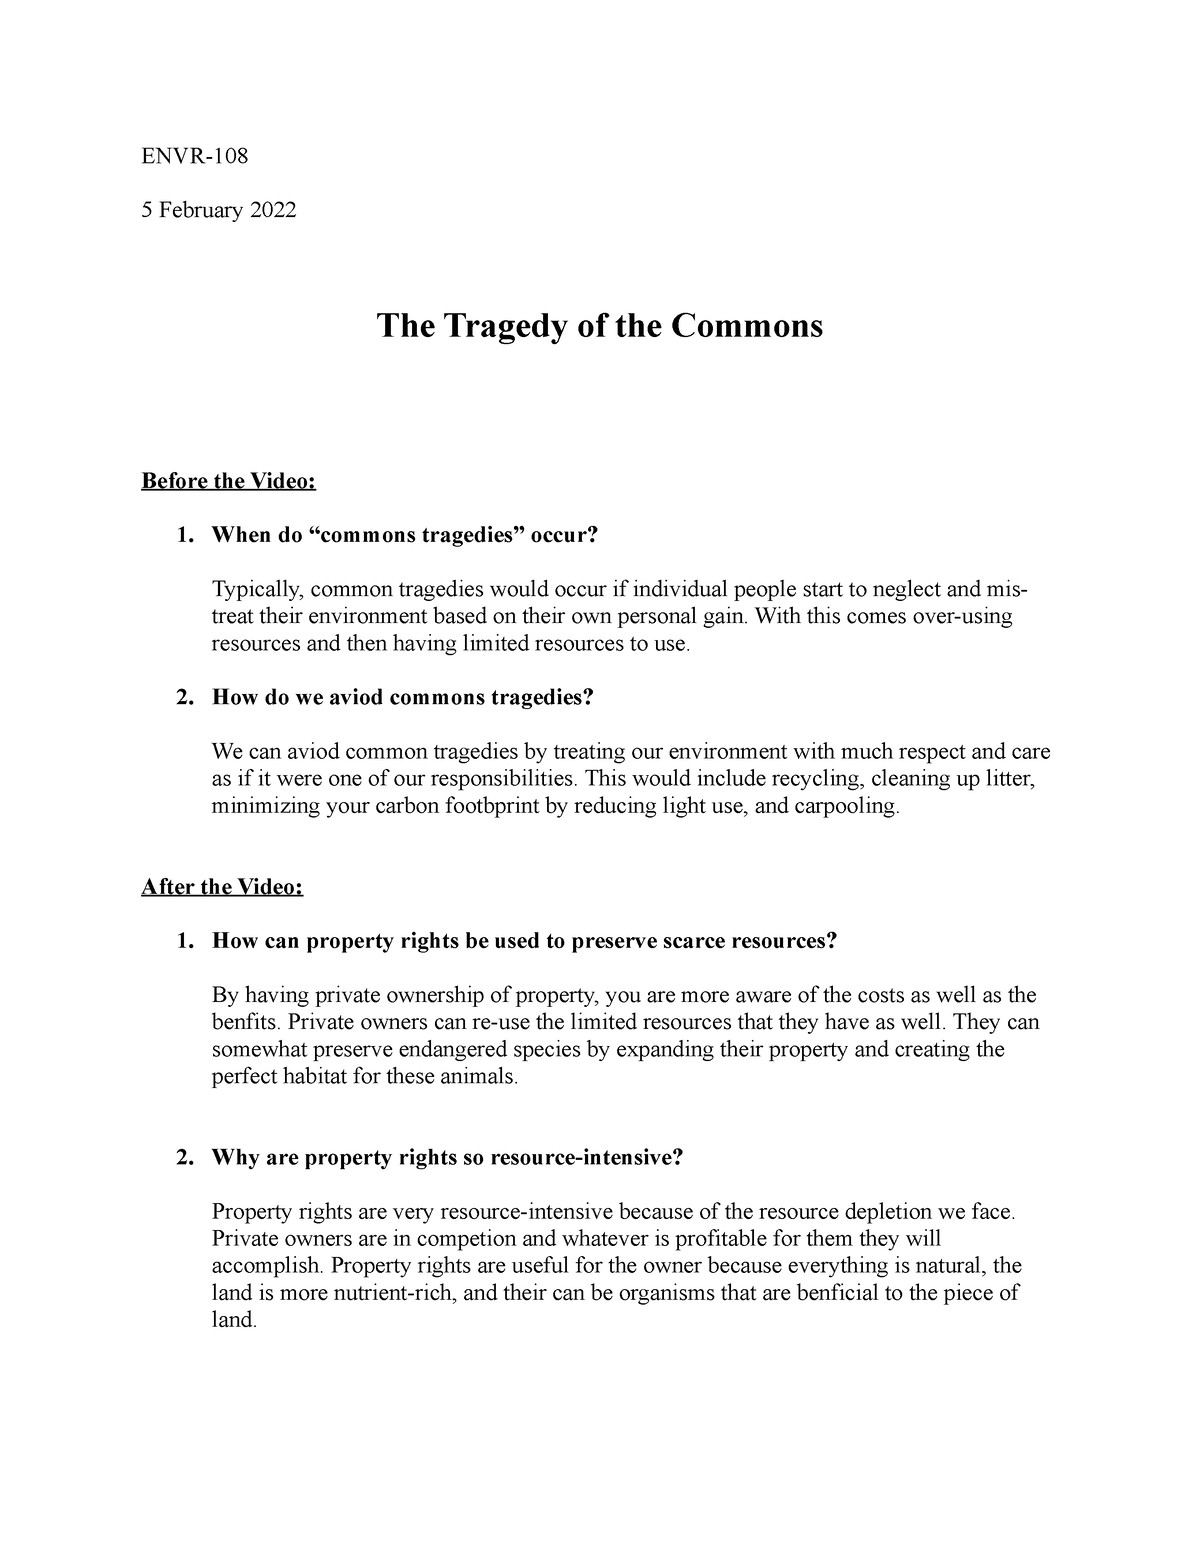 tragedy of the commons original essay